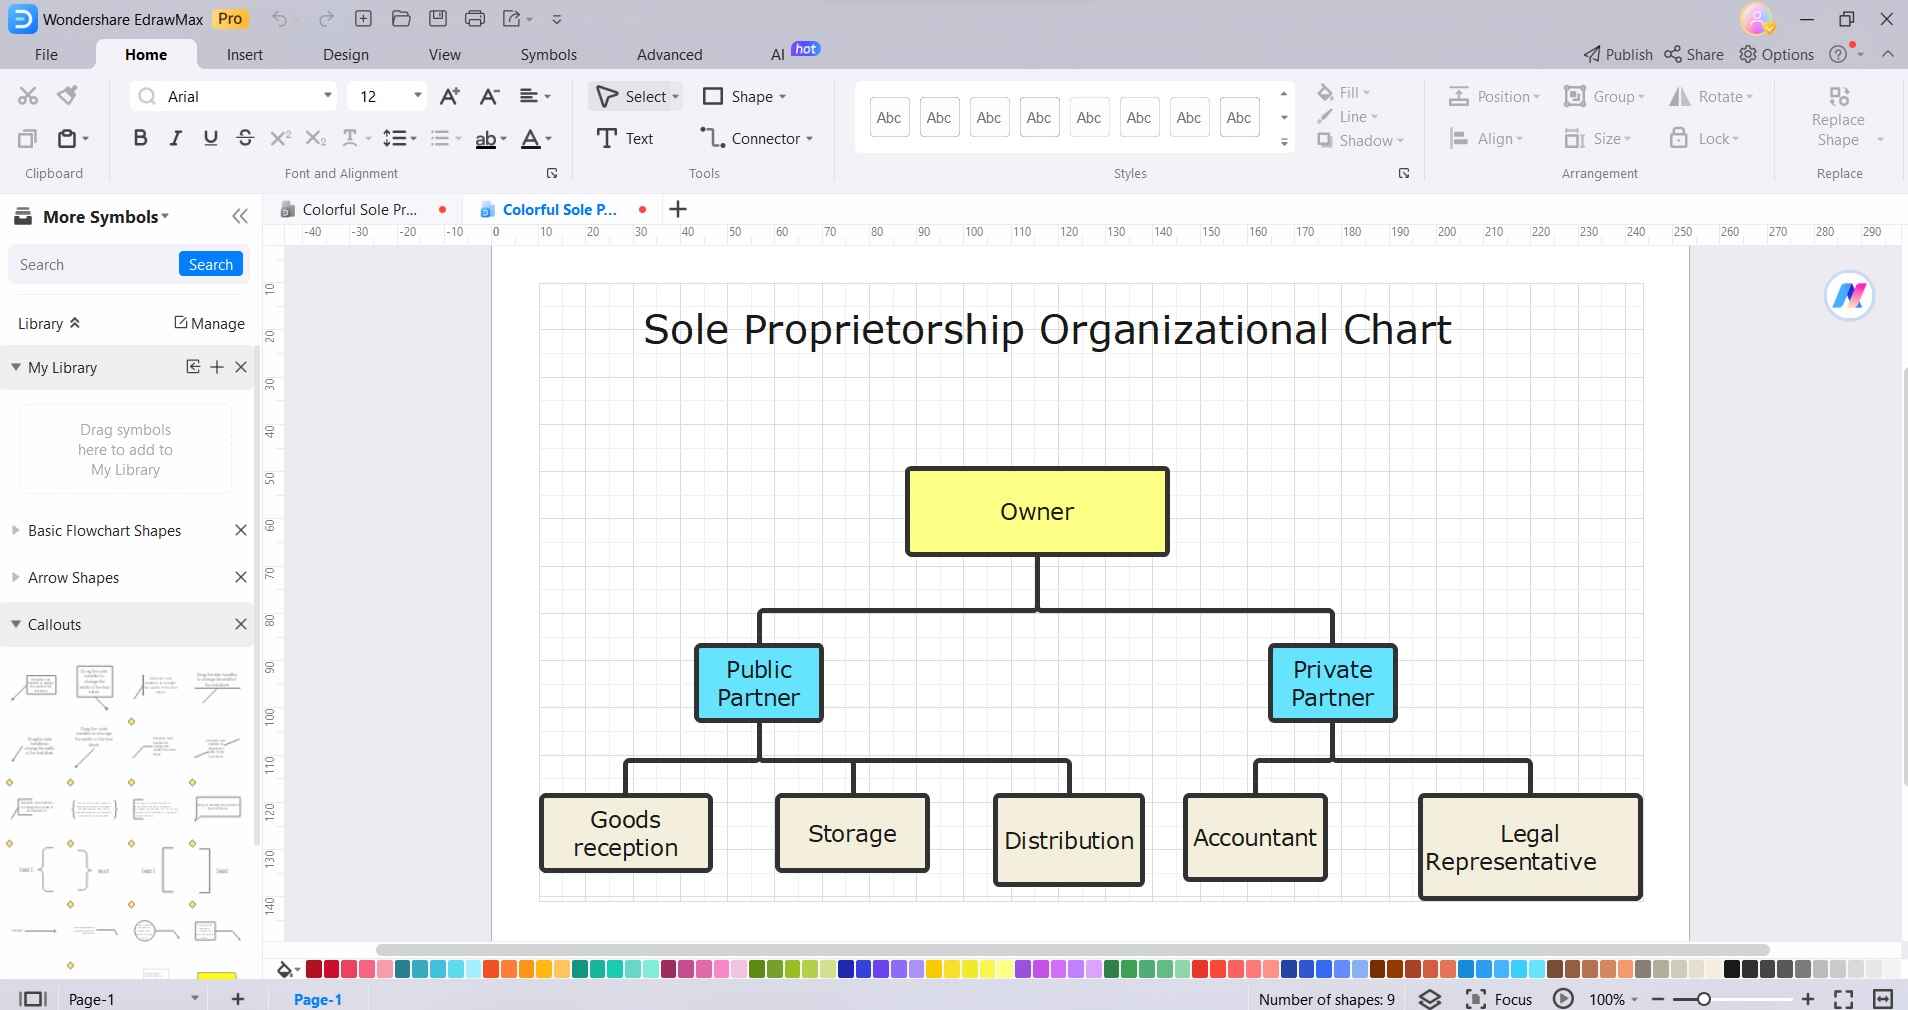 sole proprietorship organizational chart in edrawmax